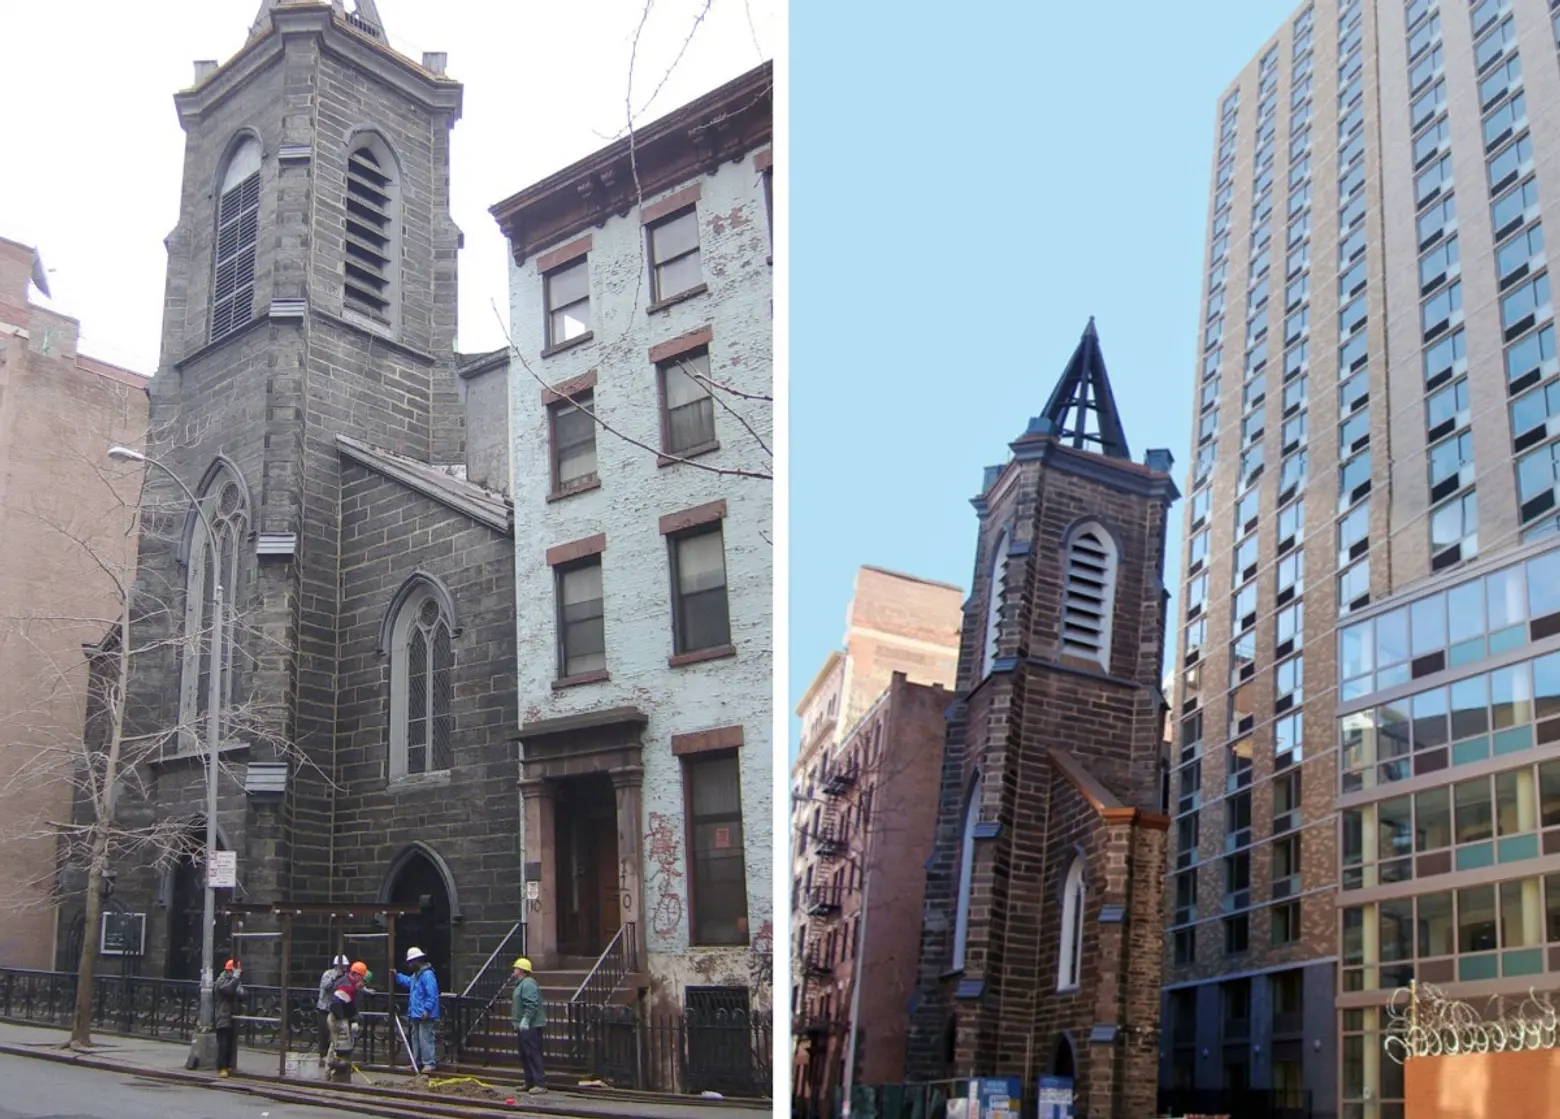 St. Ann's Church, NYU dorm, NYU Founder's Hall, NYC preservation battles